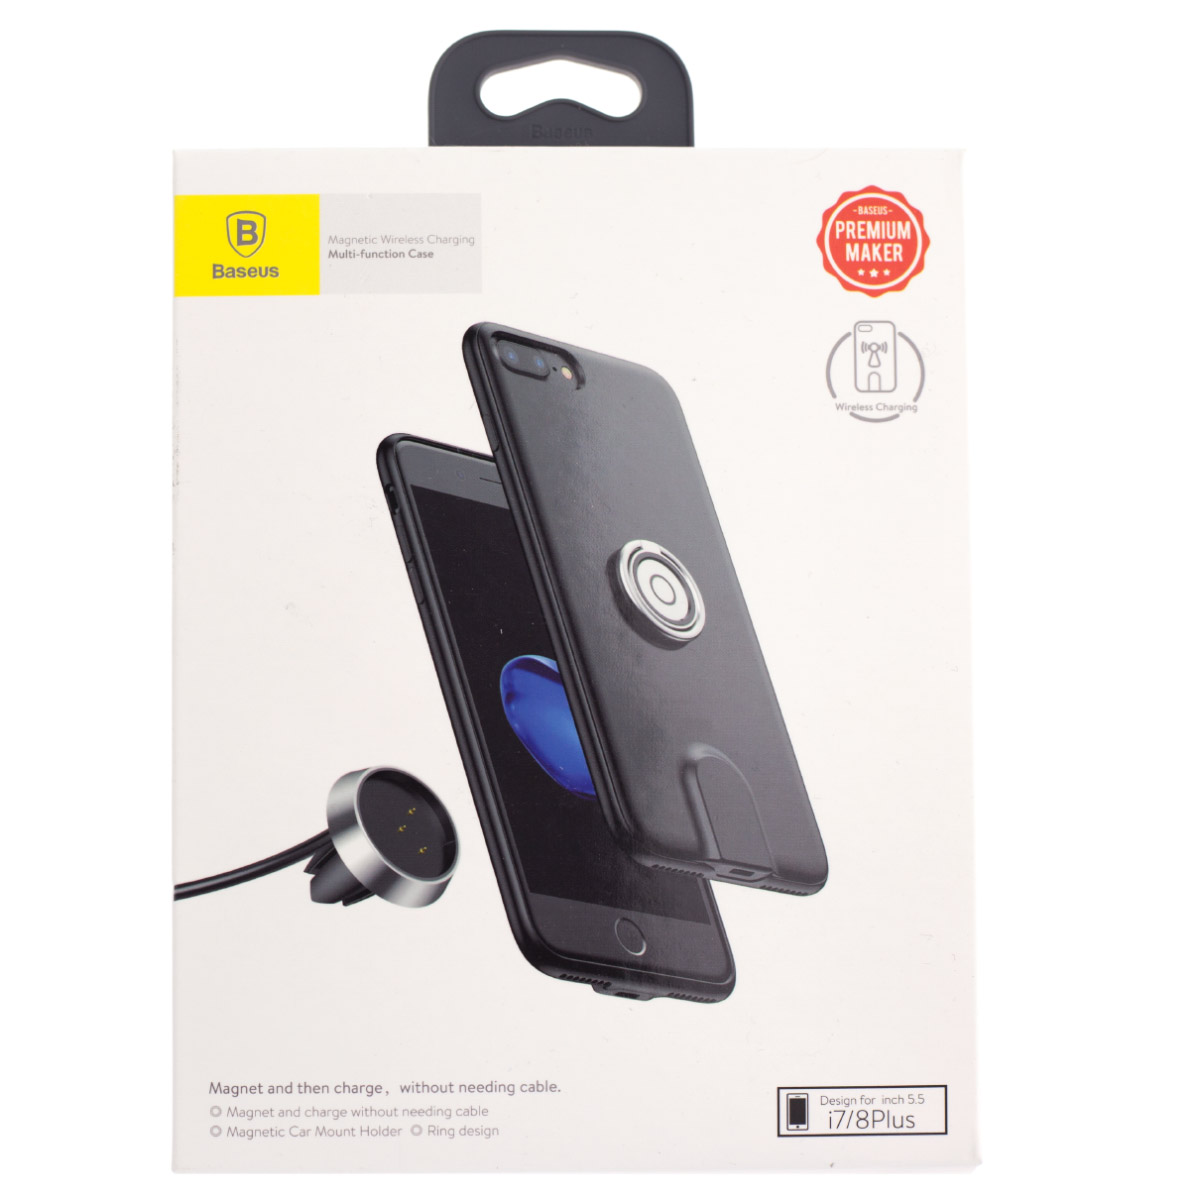 Husa Magnetic Wireless iPhone 7/8 Plus, Baseus Neagra thumb